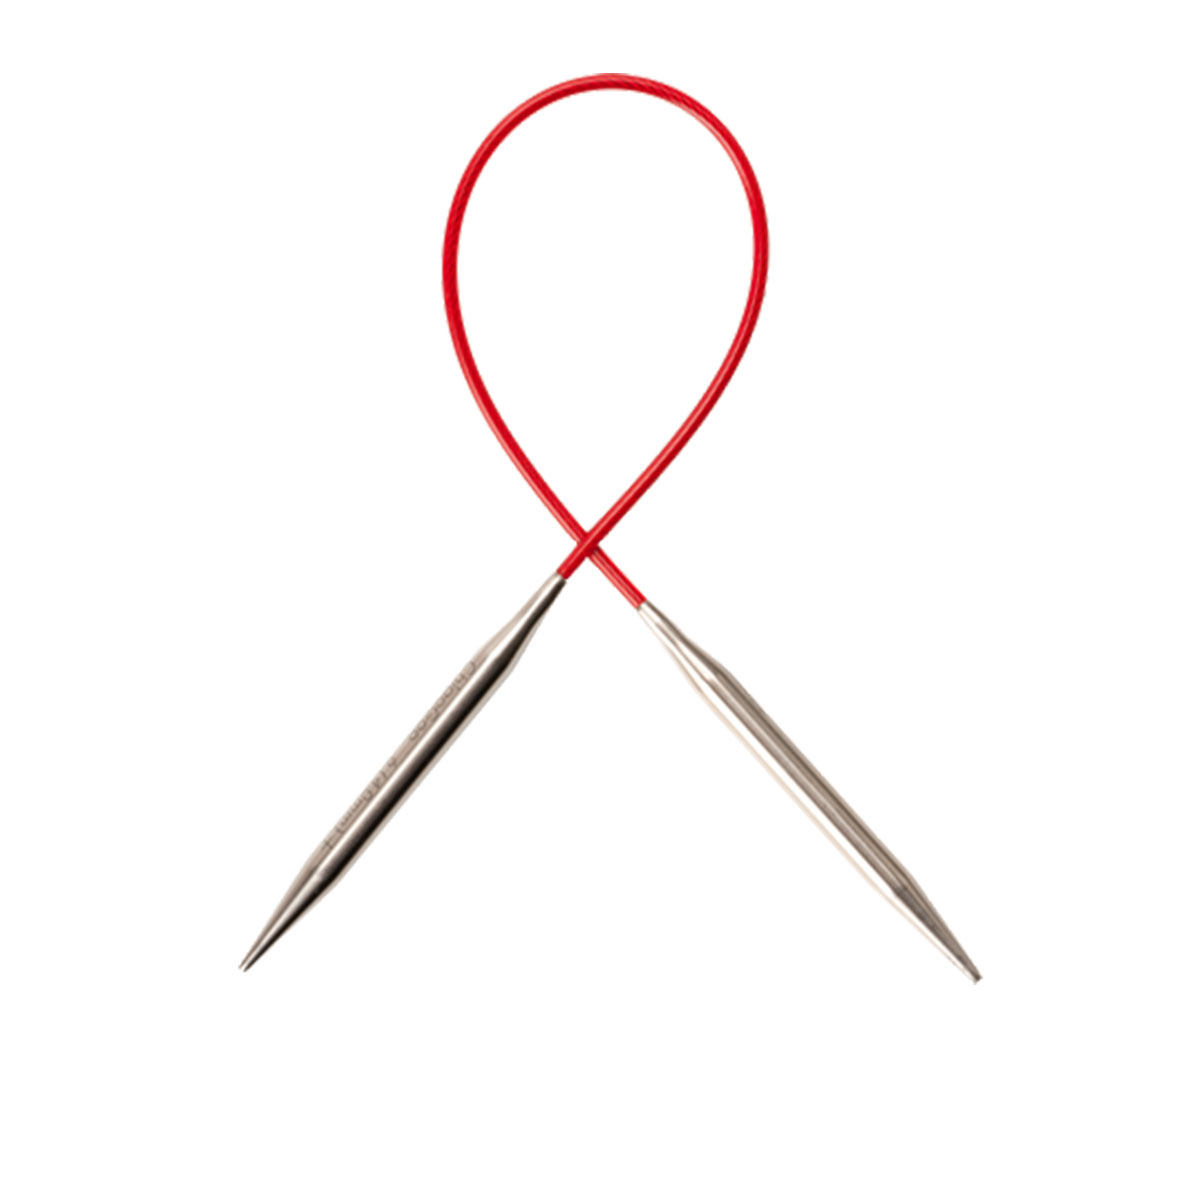 ChiaoGoo RED Lace Circular Needles - US 7 (4.50mm) - 16 Needles